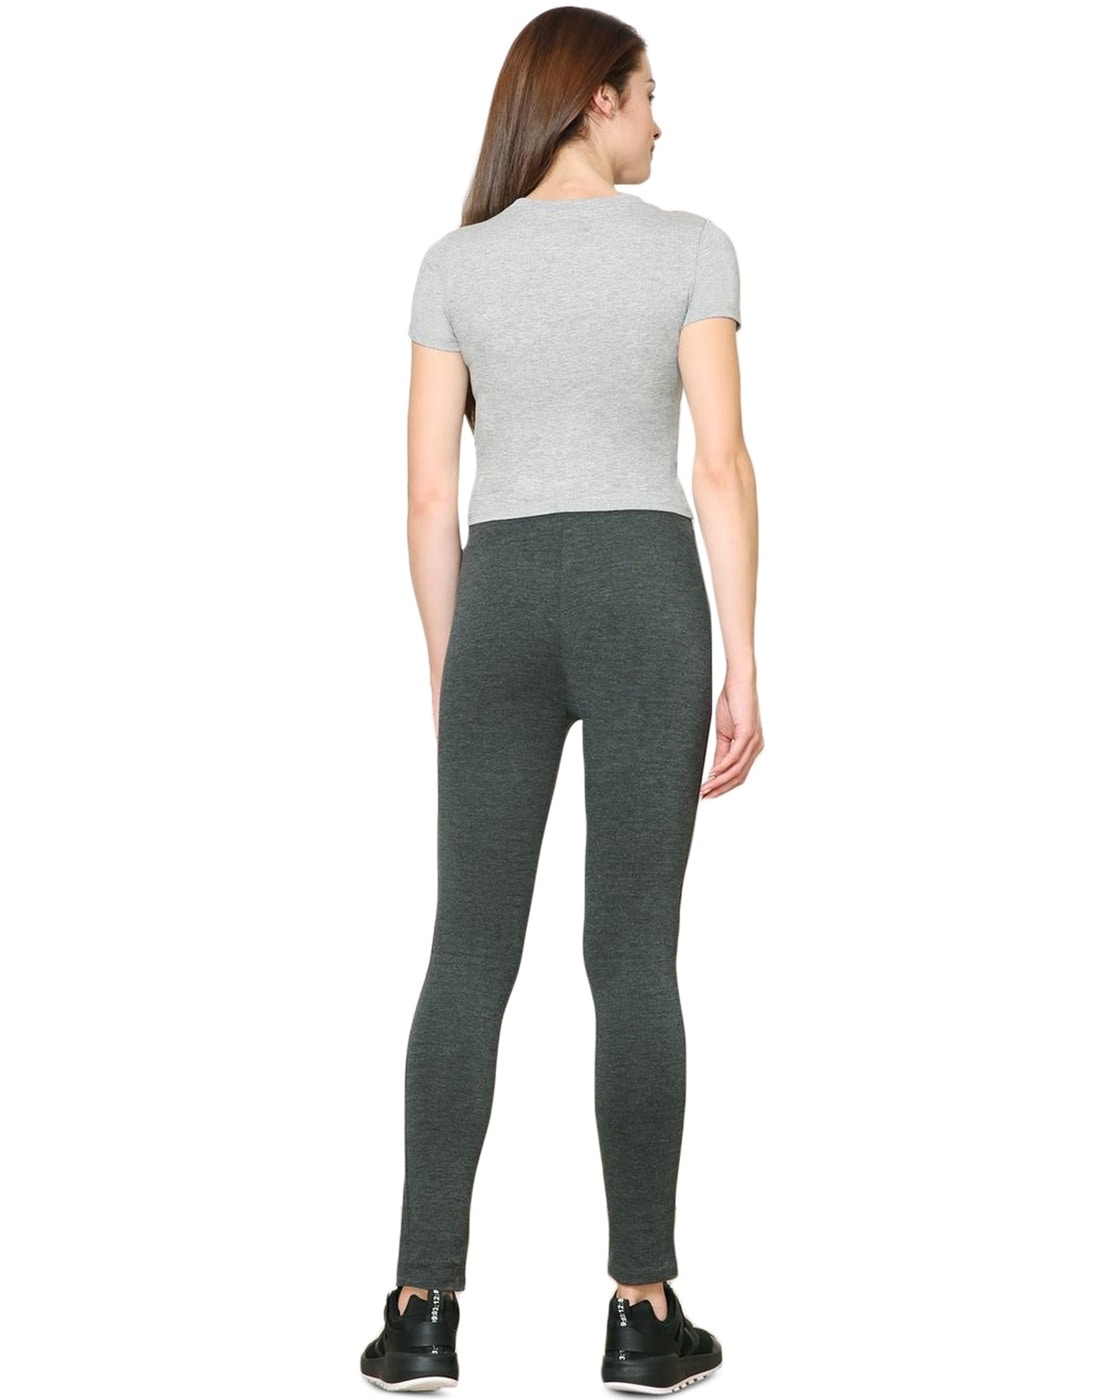 Buy Charcoal Melange Track Pants for Women by VAN HEUSEN Online